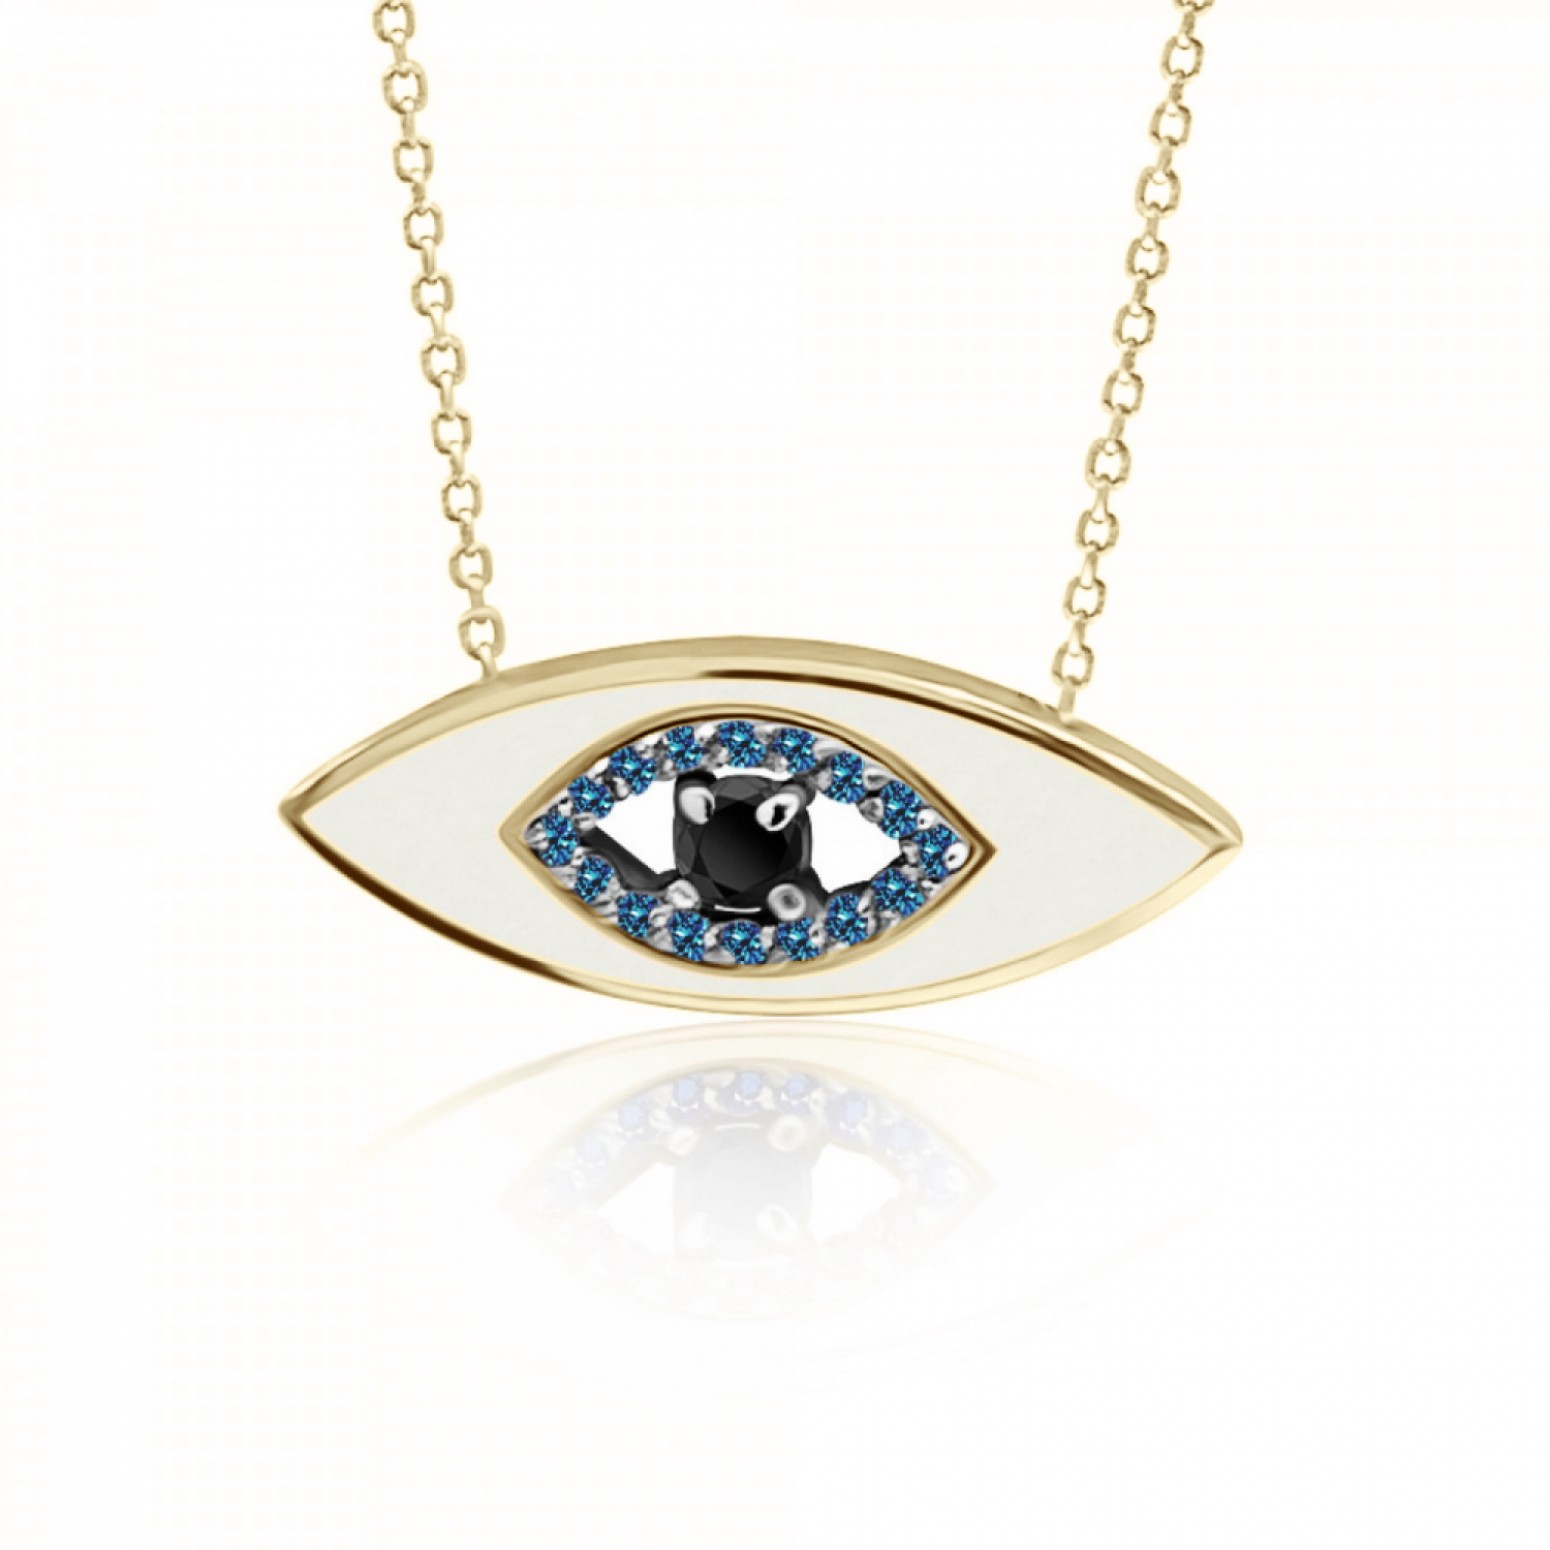 Eye necklace, Κ9 gold with blue, black zircon and enamel, ko4979 NECKLACES Κοσμηματα - chrilia.gr